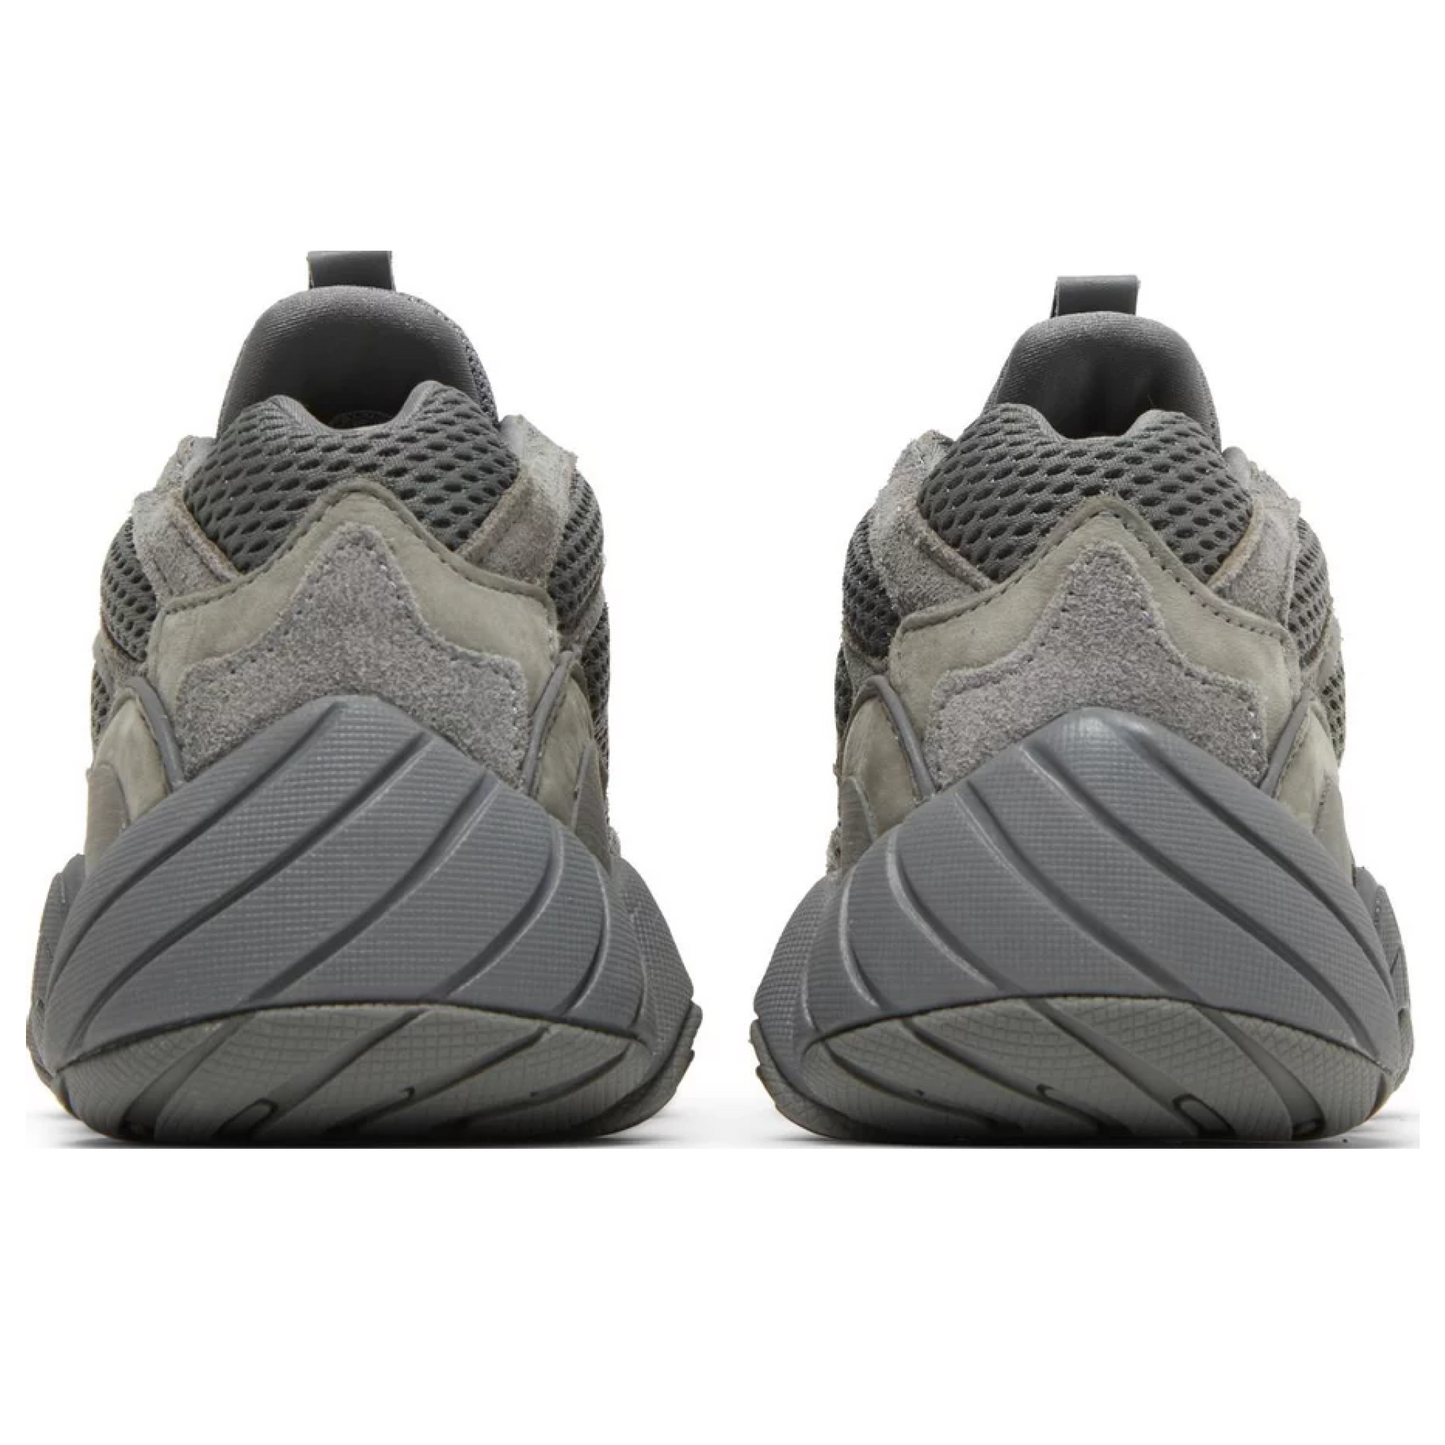 Adidas Yeezy 500 Granite Yeezy